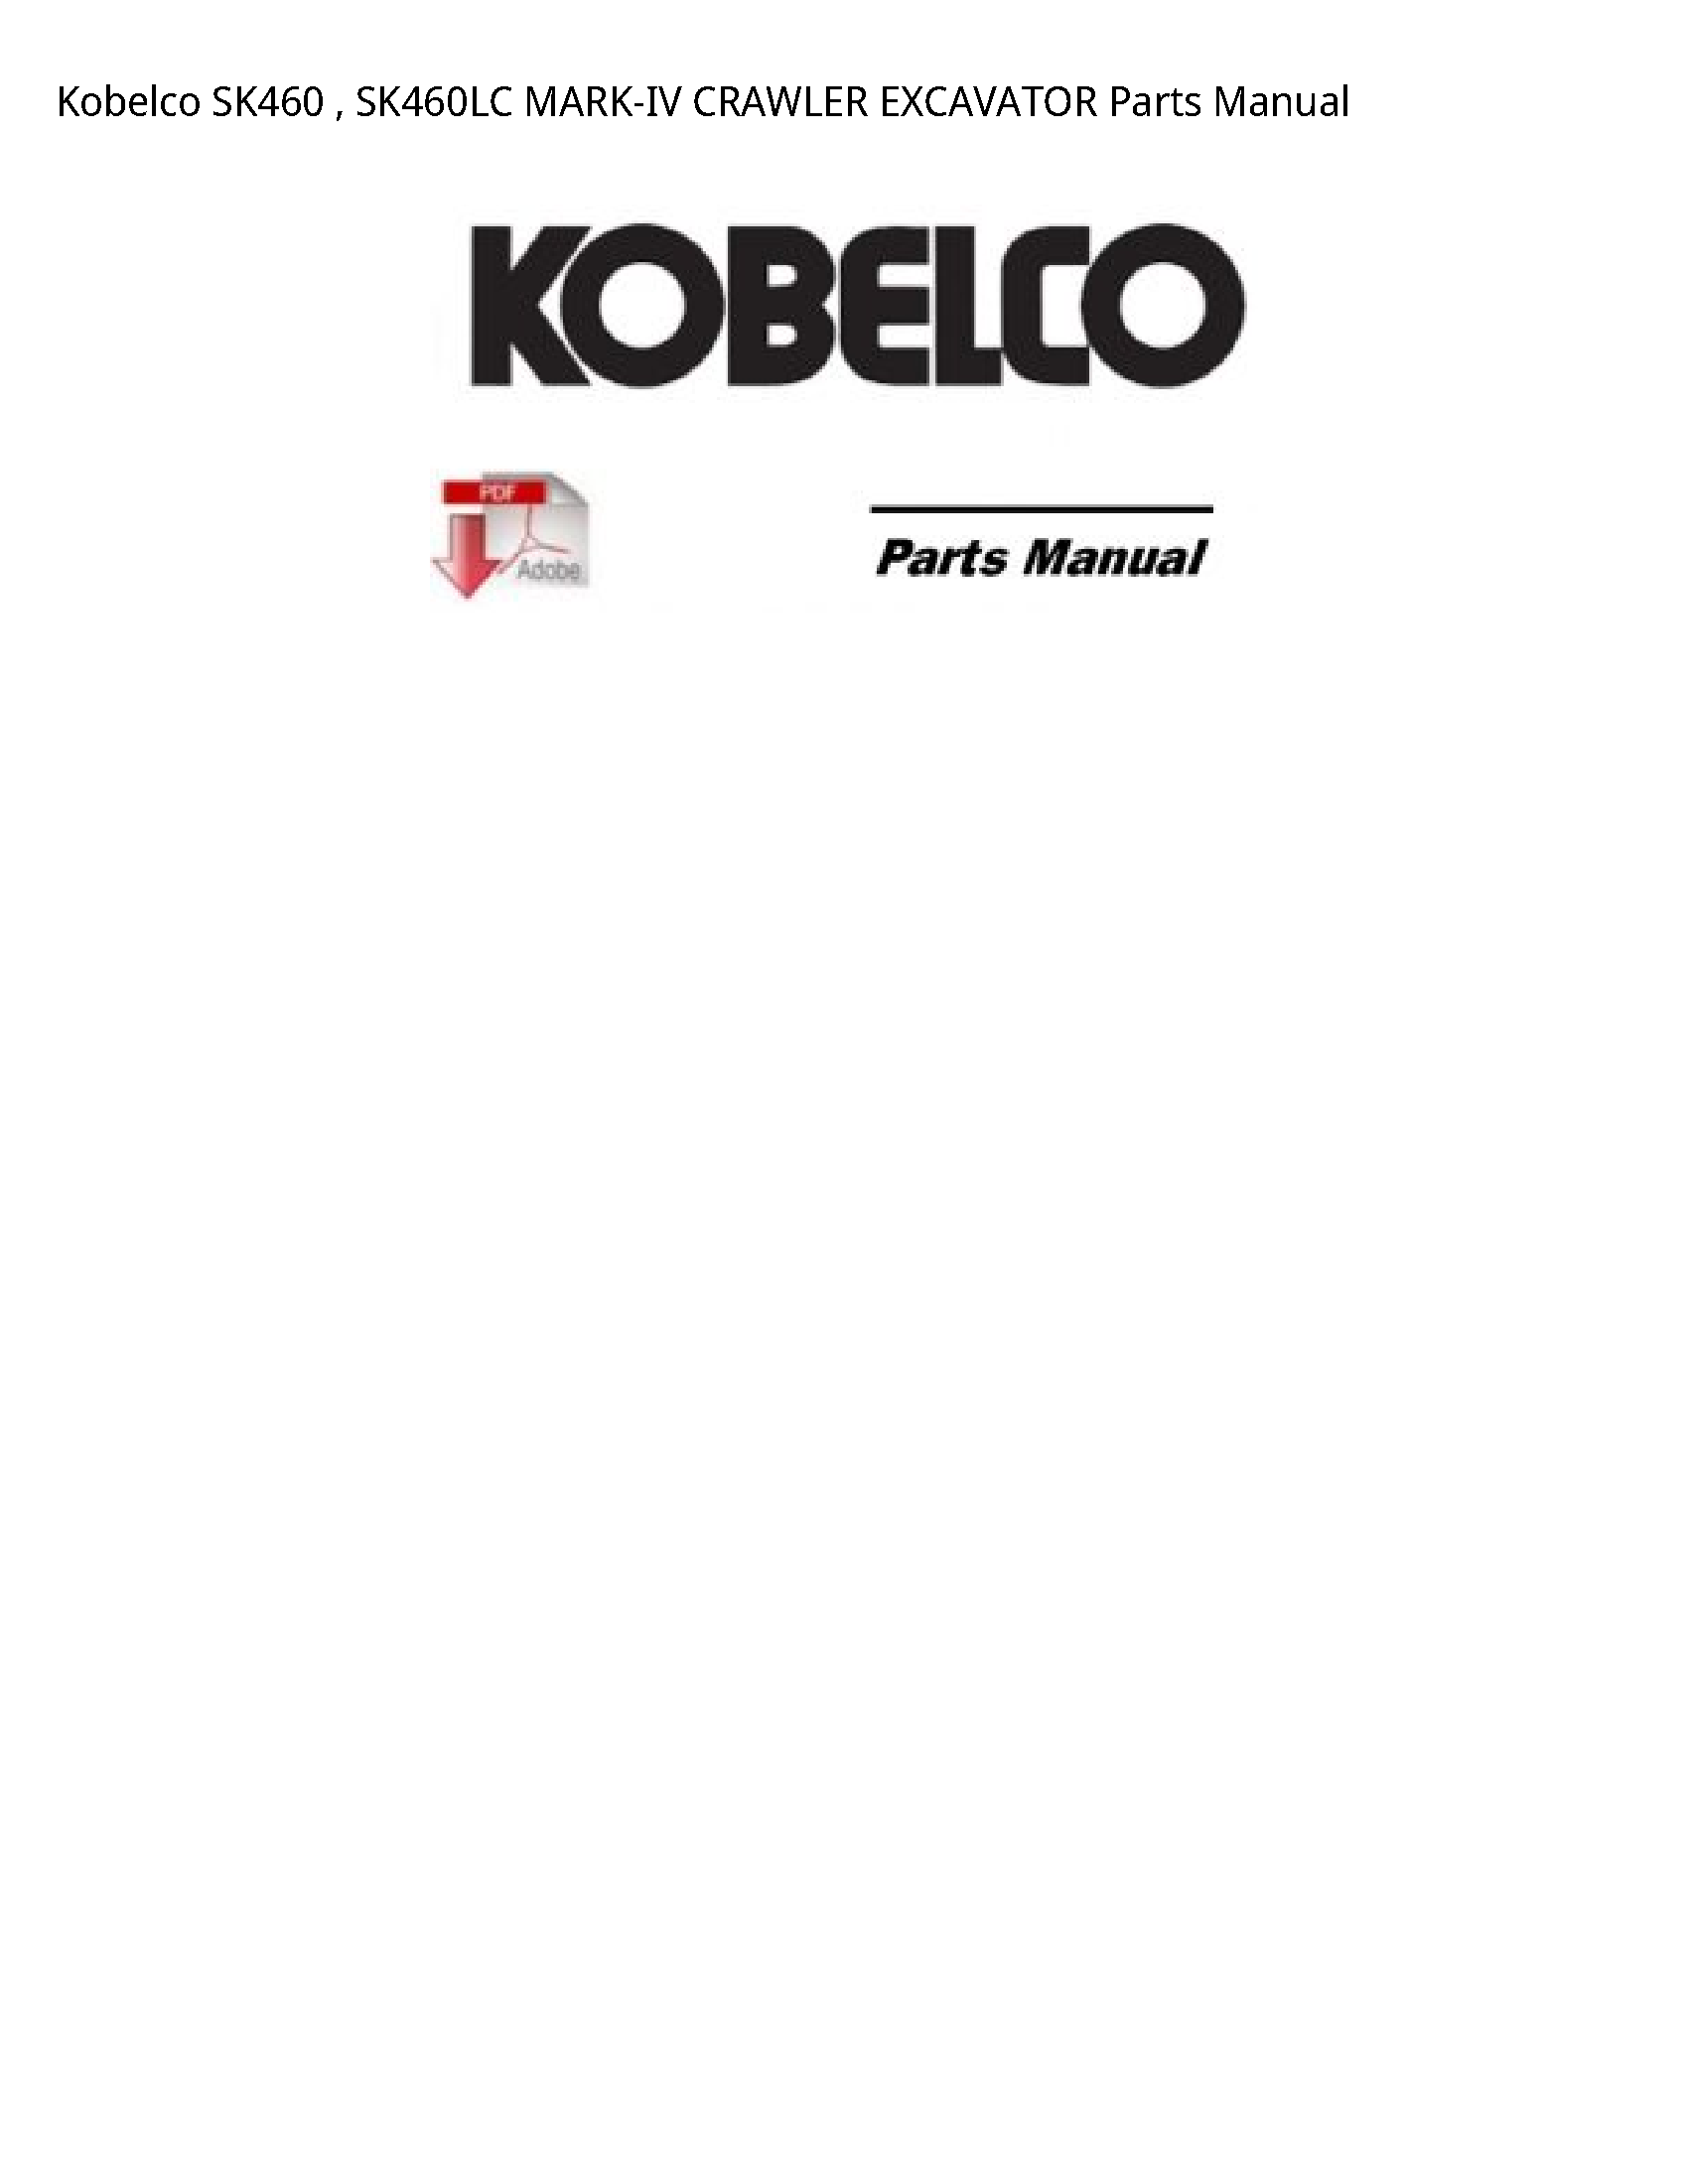 Kobelco SK460 MARK-IV CRAWLER EXCAVATOR Parts manual